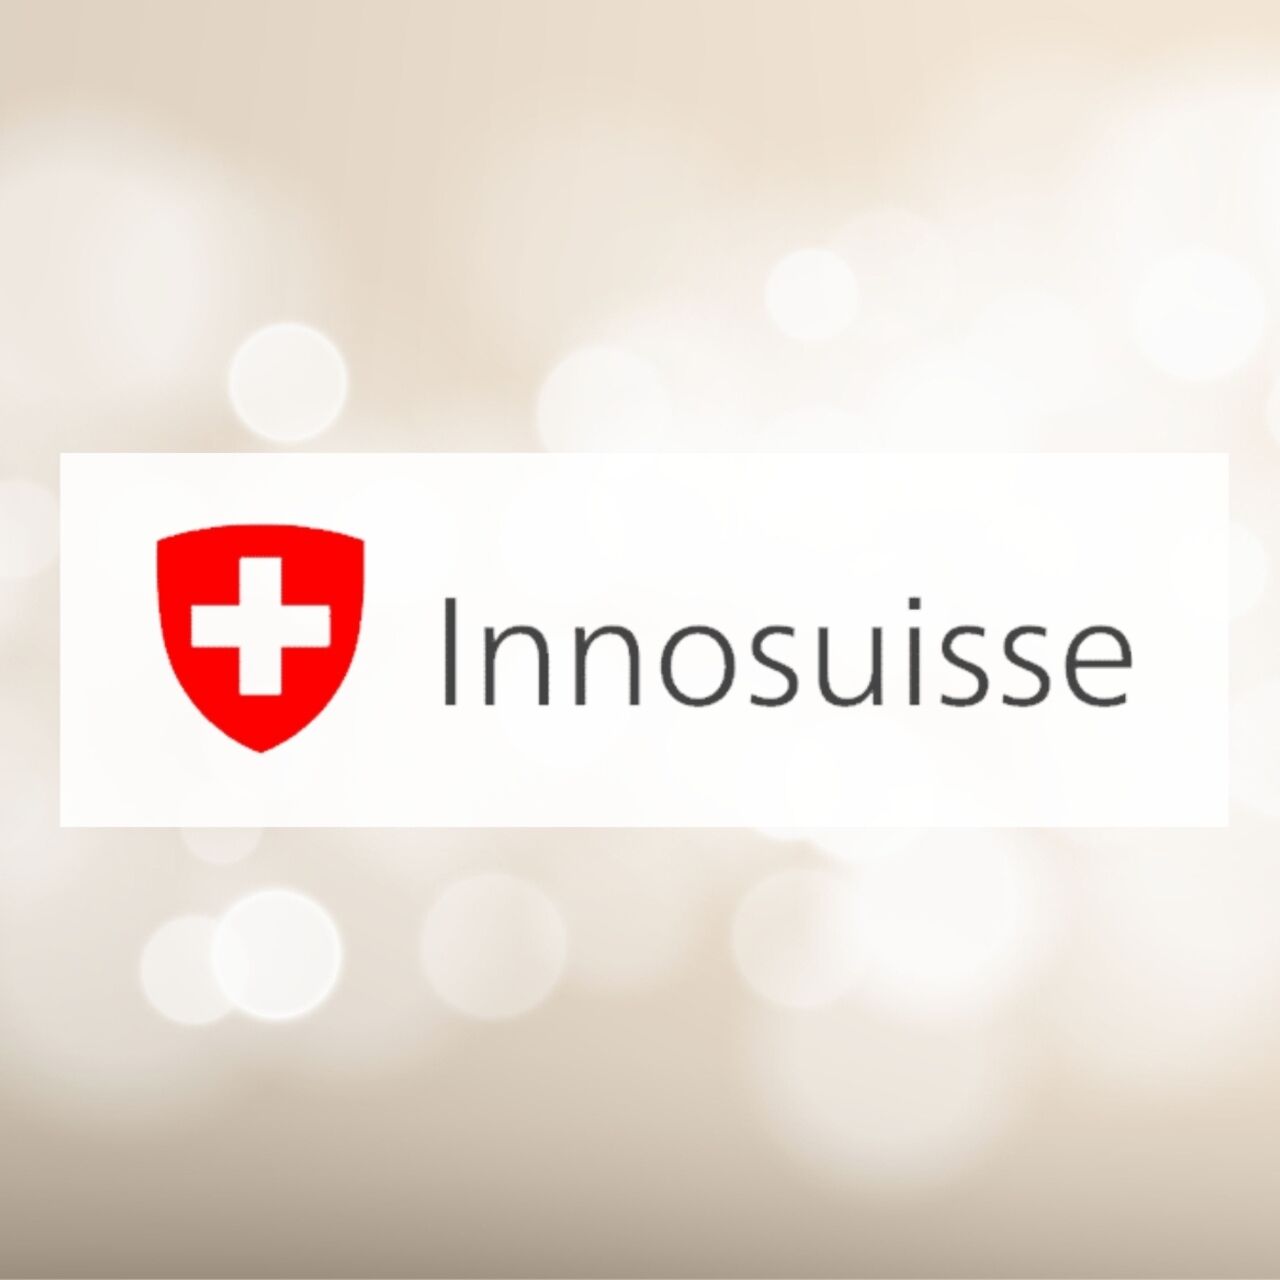 Innosuisse: スイスのイノベーション促進庁